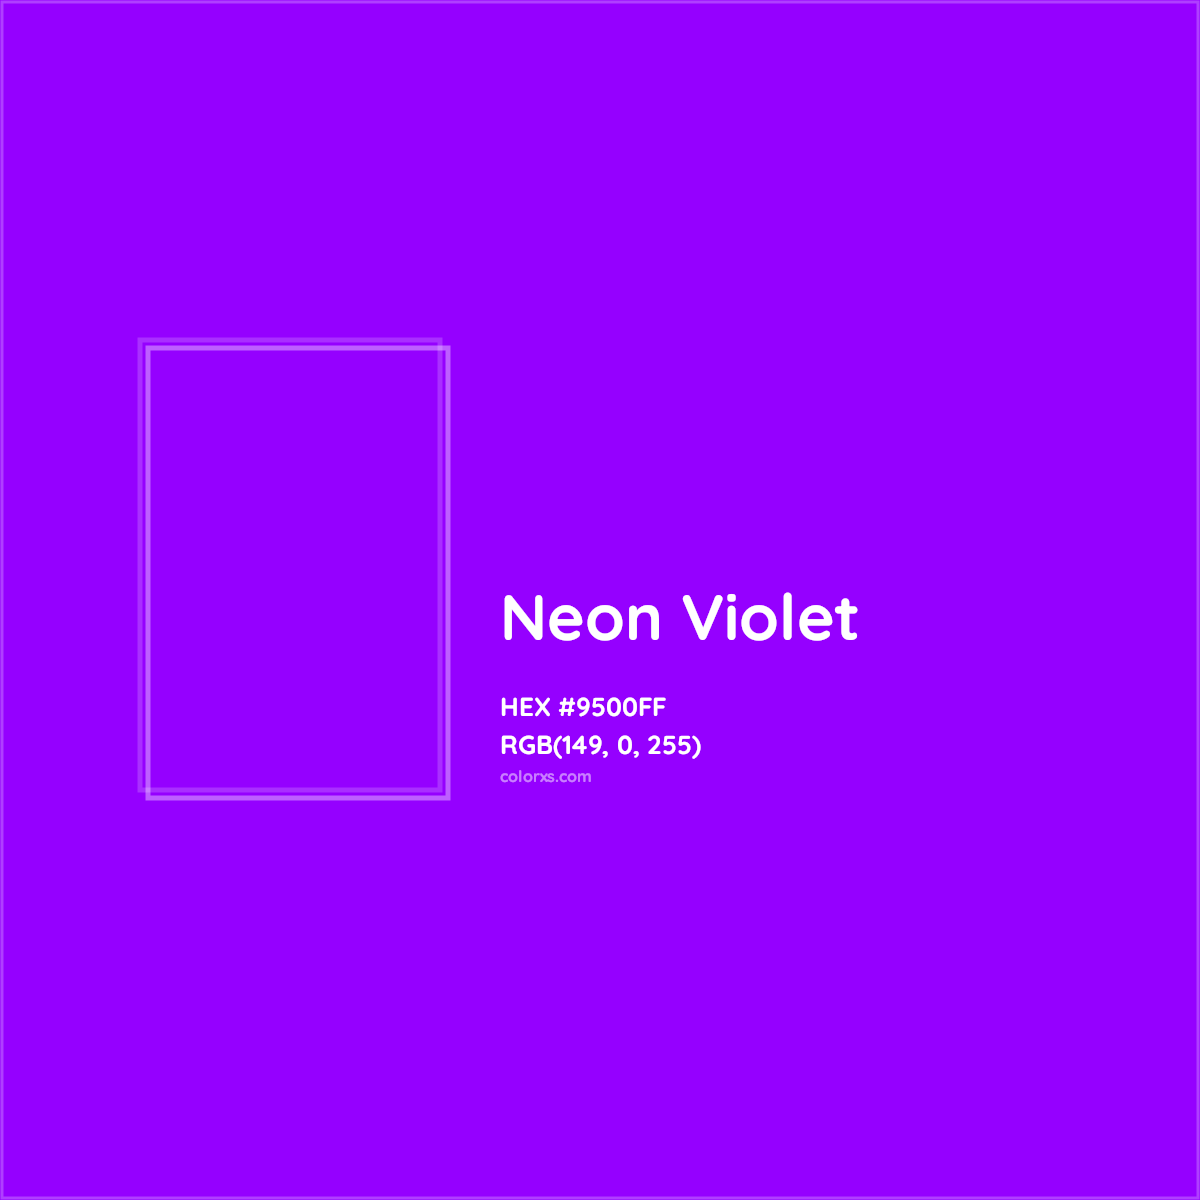 About Neon Violet - Color codes, similar colors and paints 